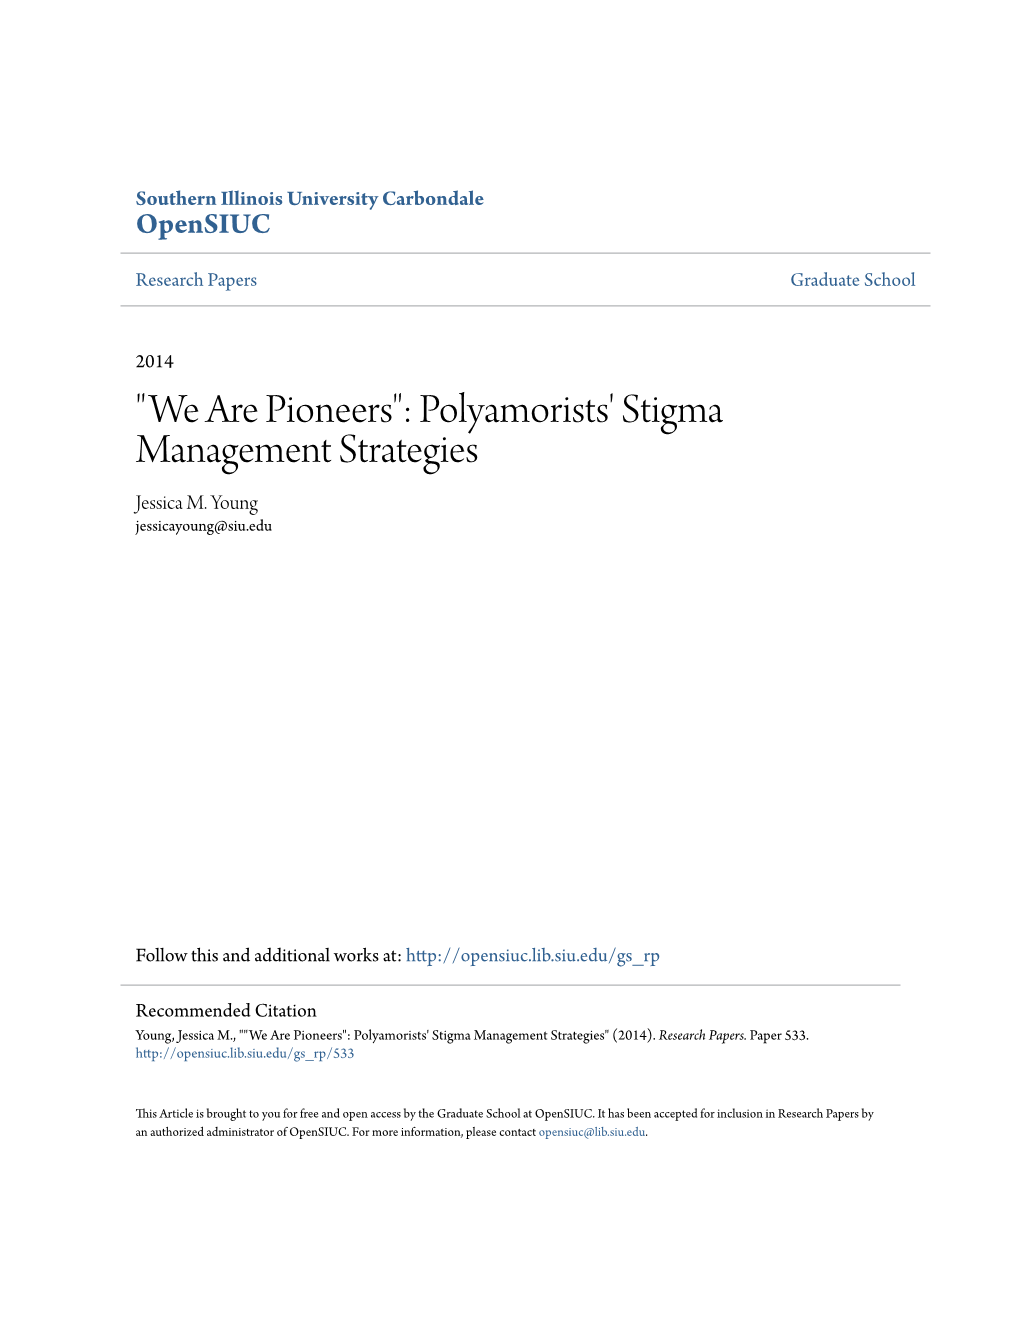 Polyamorists' Stigma Management Strategies Jessica M